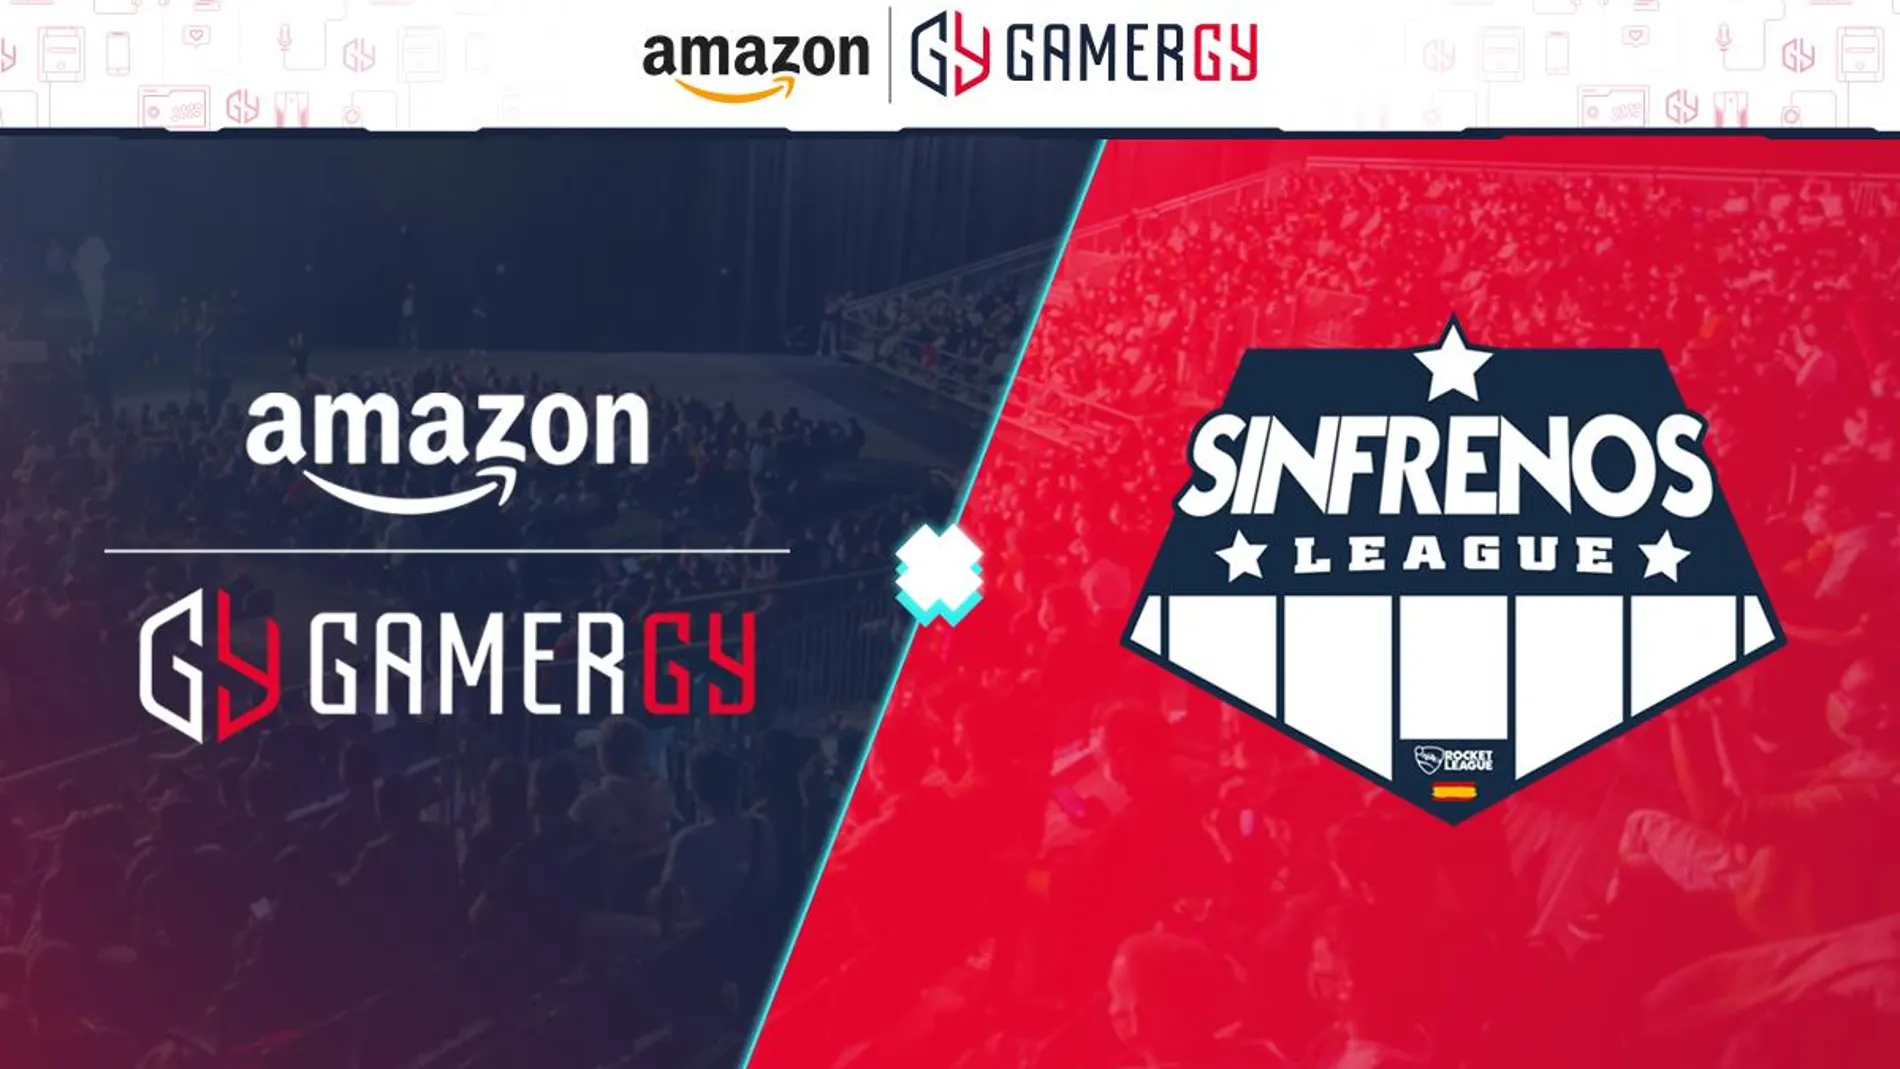 Sinfrenos League | Amazon GAMERGY